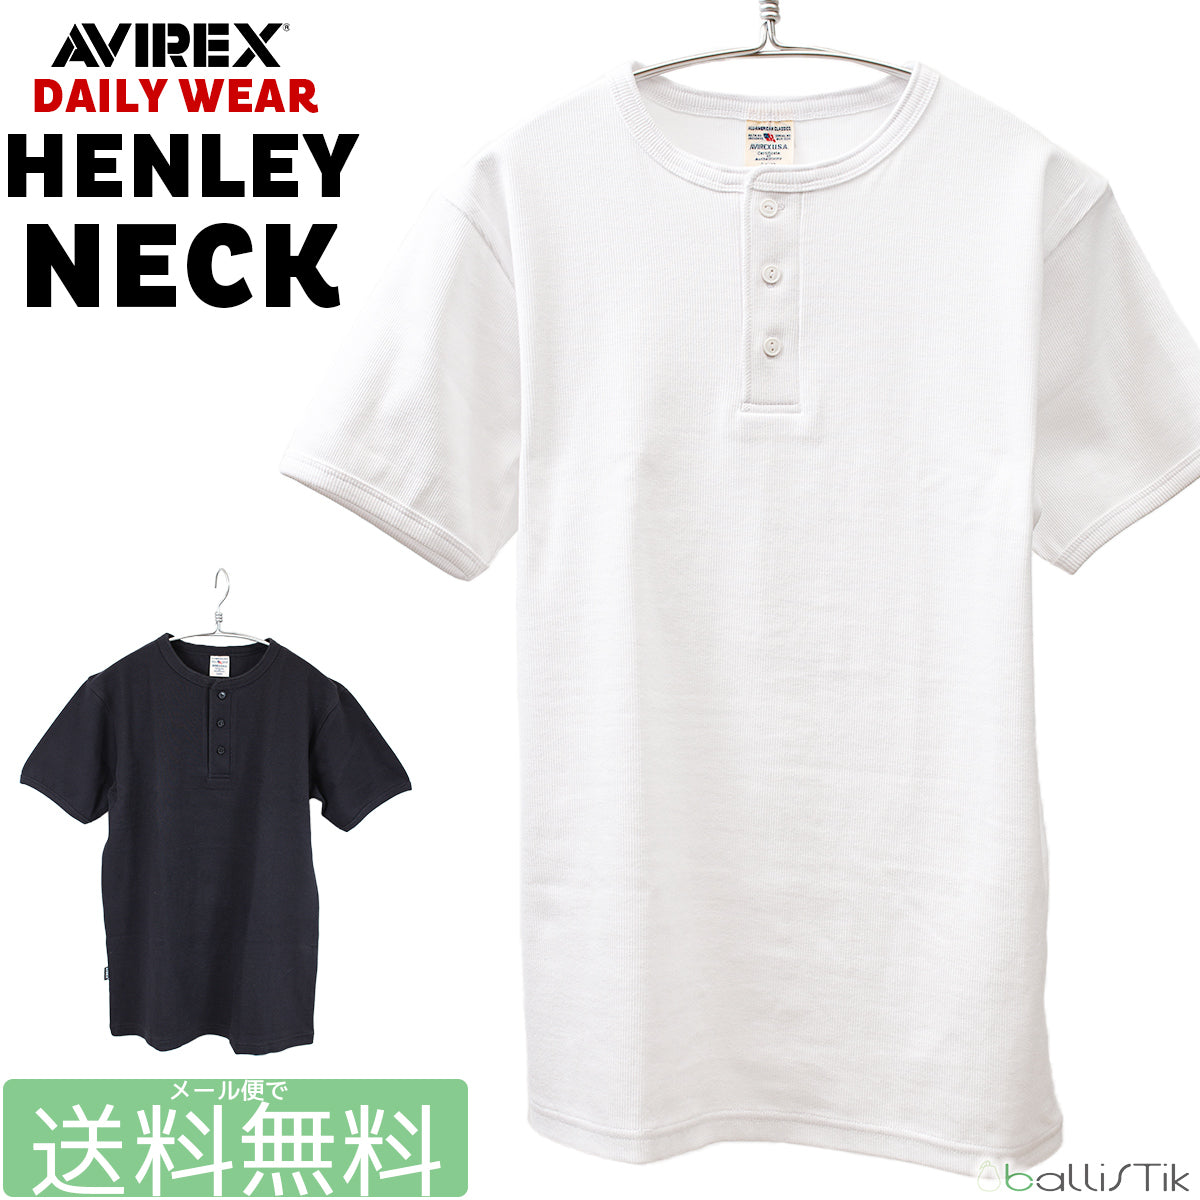 AVIREX/アヴィレックス/アビレックス/DAILY S/S RIB HENLEY NECK T-SHIRT/ヘンリーネックTシャツ/メイン